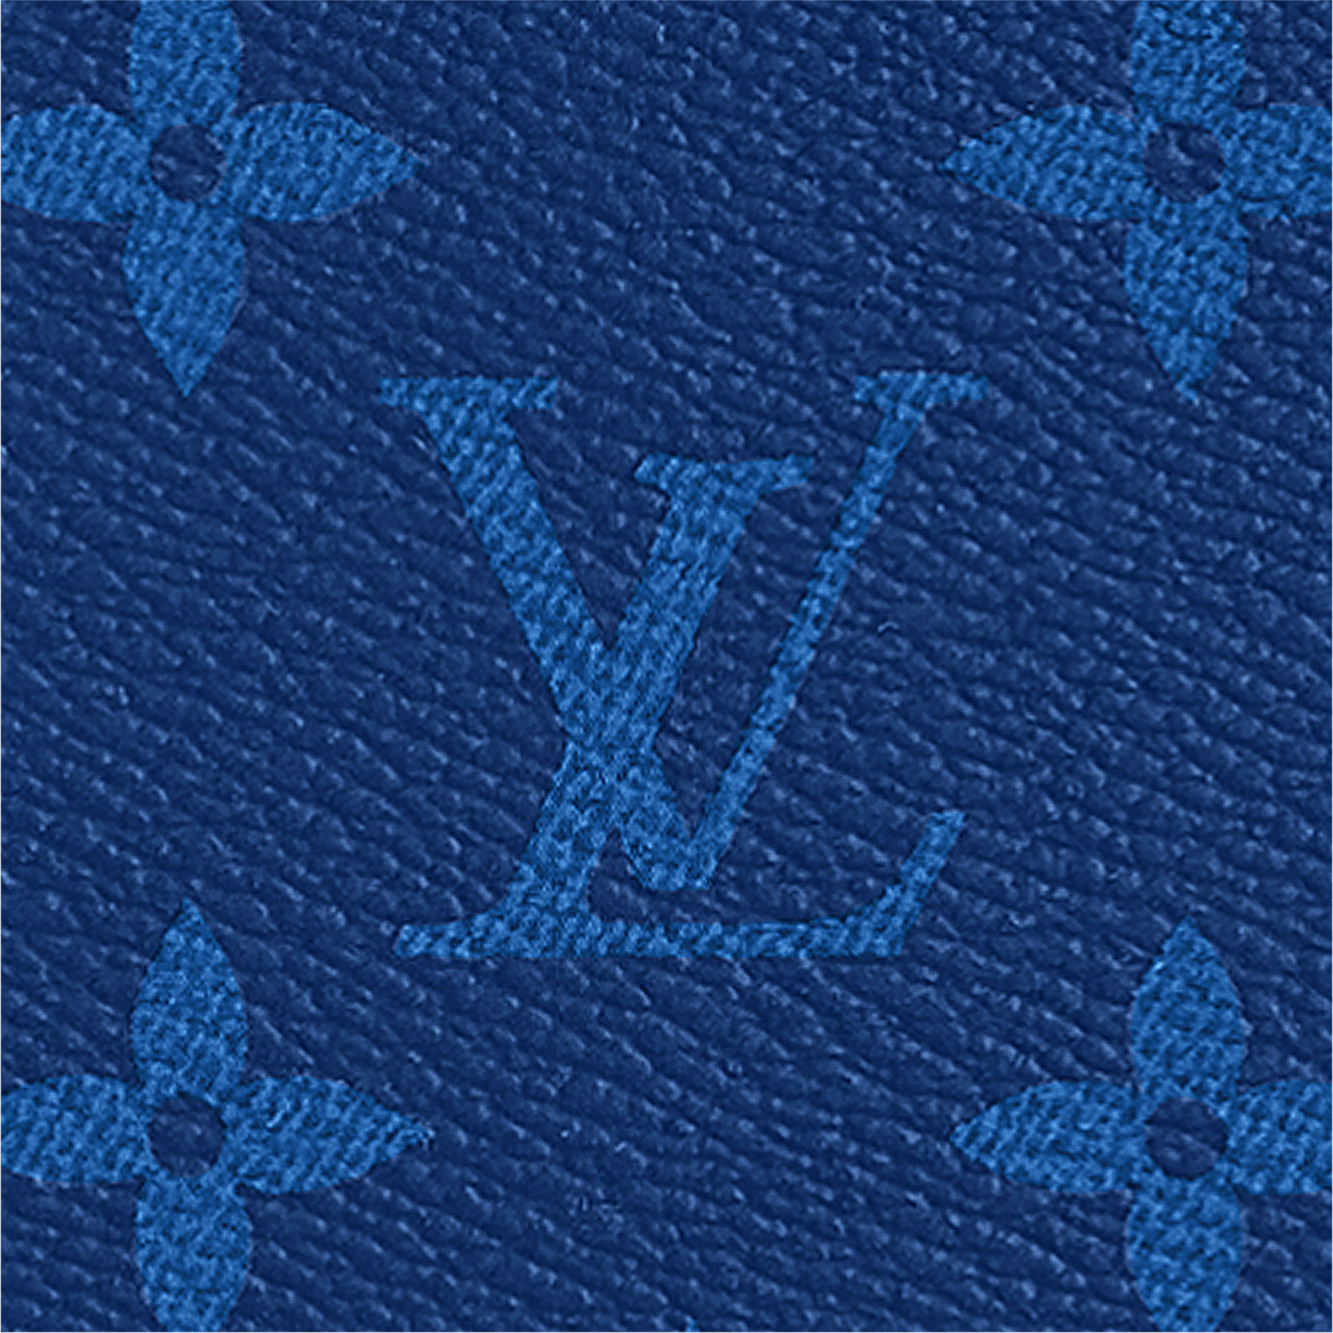 Louis Vuitton Coin Card Holder - Vitkac shop online